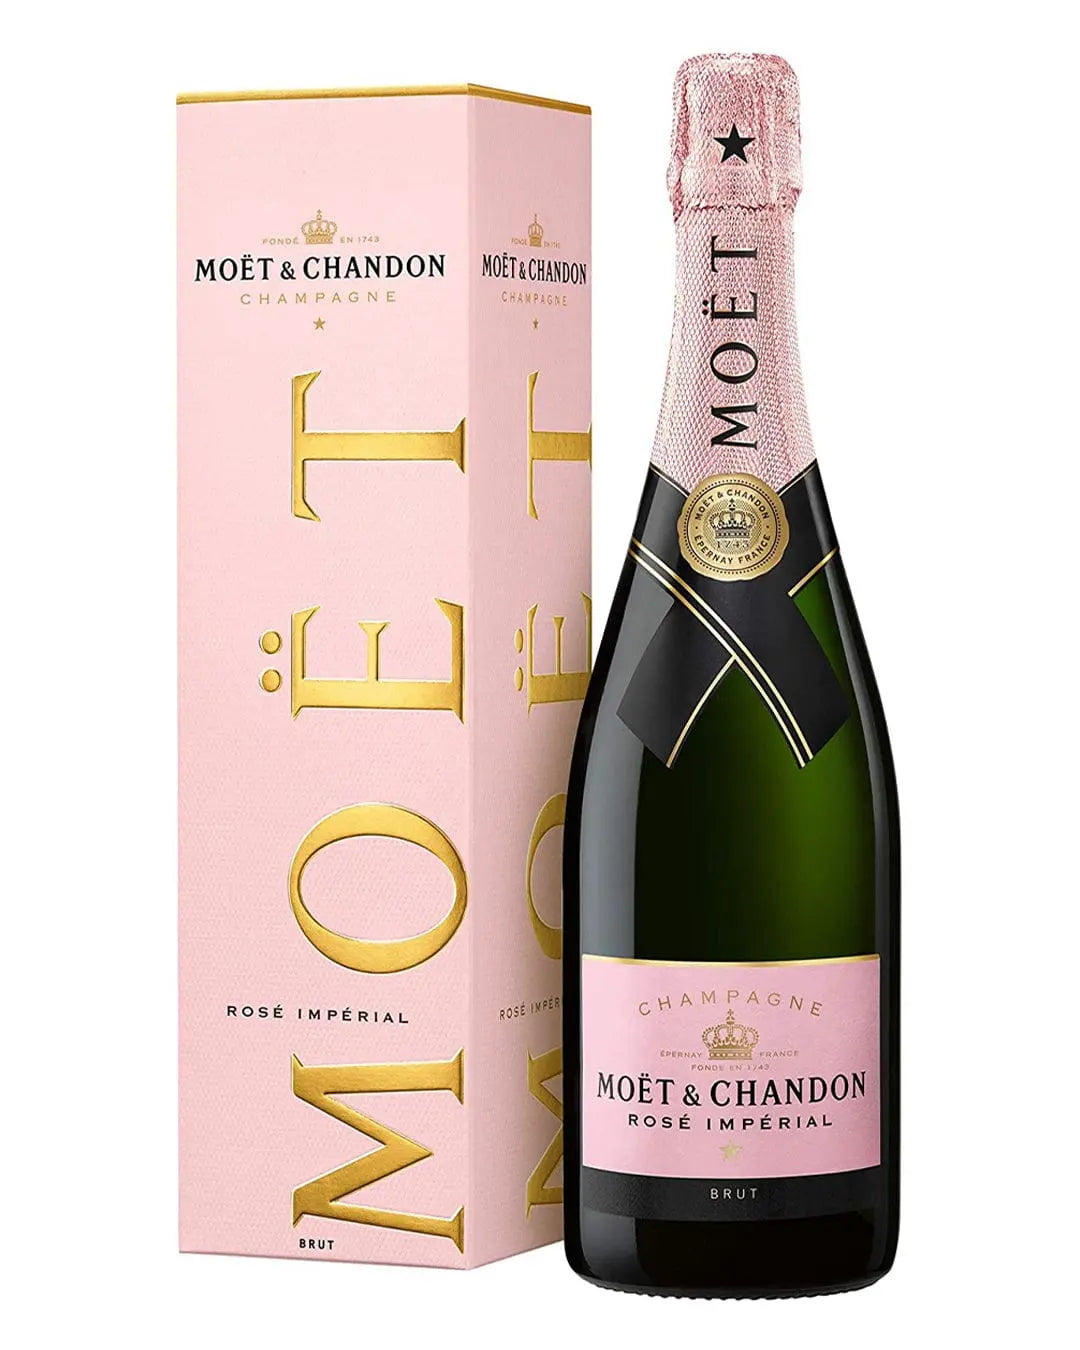 Moet & Chandon Nectar Imperial Rose Champagne Rose Champagne Blend